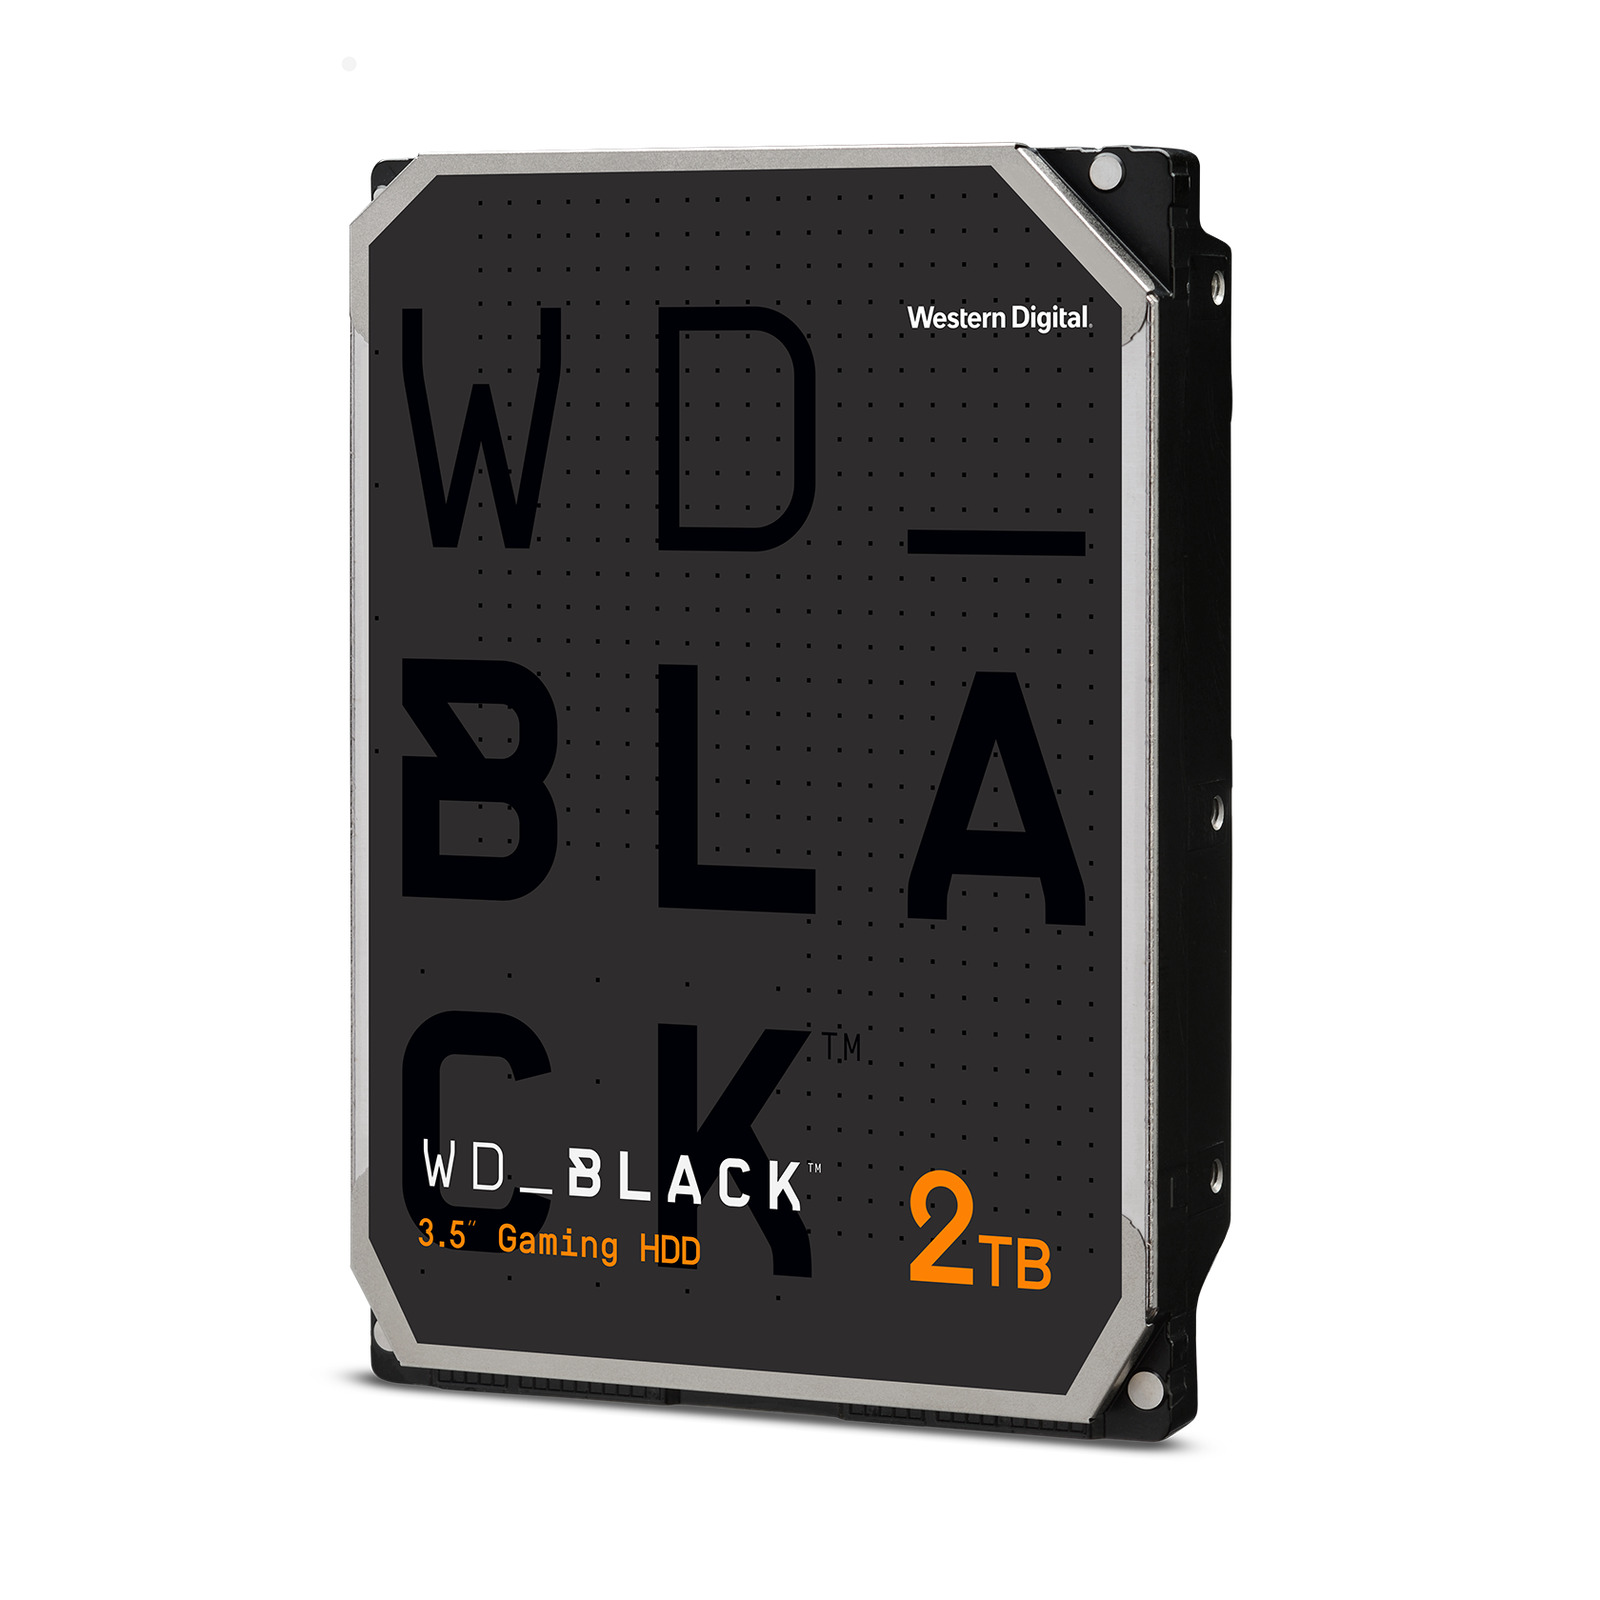 WD_BLACK 2TB 3.5\'\' Internal Gaming Hard Drive, 64MB Cache - WD2003FZEX